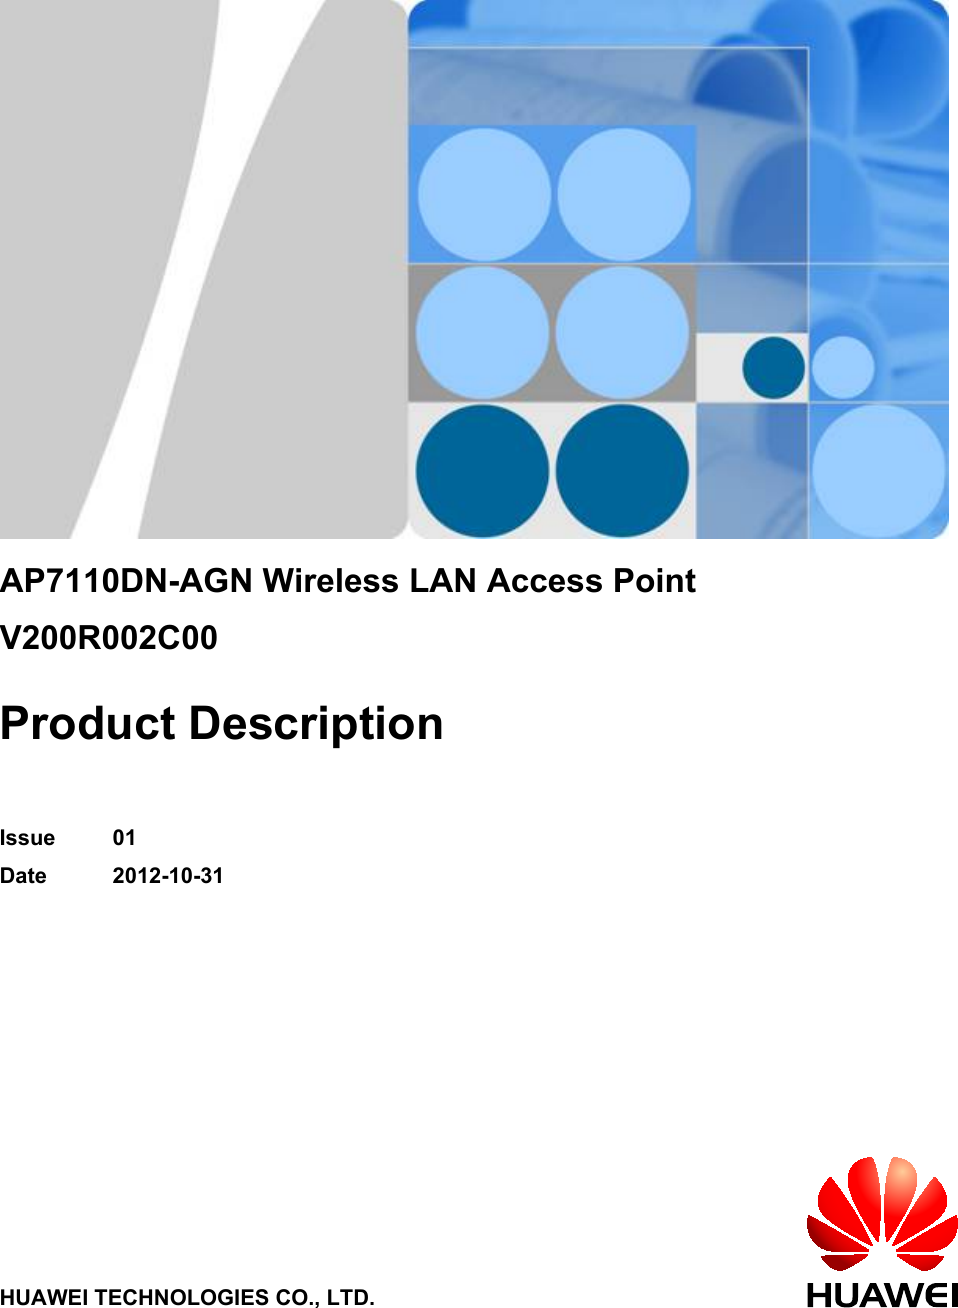 AP7110DN-AGN Wireless LAN Access PointV200R002C00Product DescriptionIssue 01Date 2012-10-31HUAWEI TECHNOLOGIES CO., LTD.